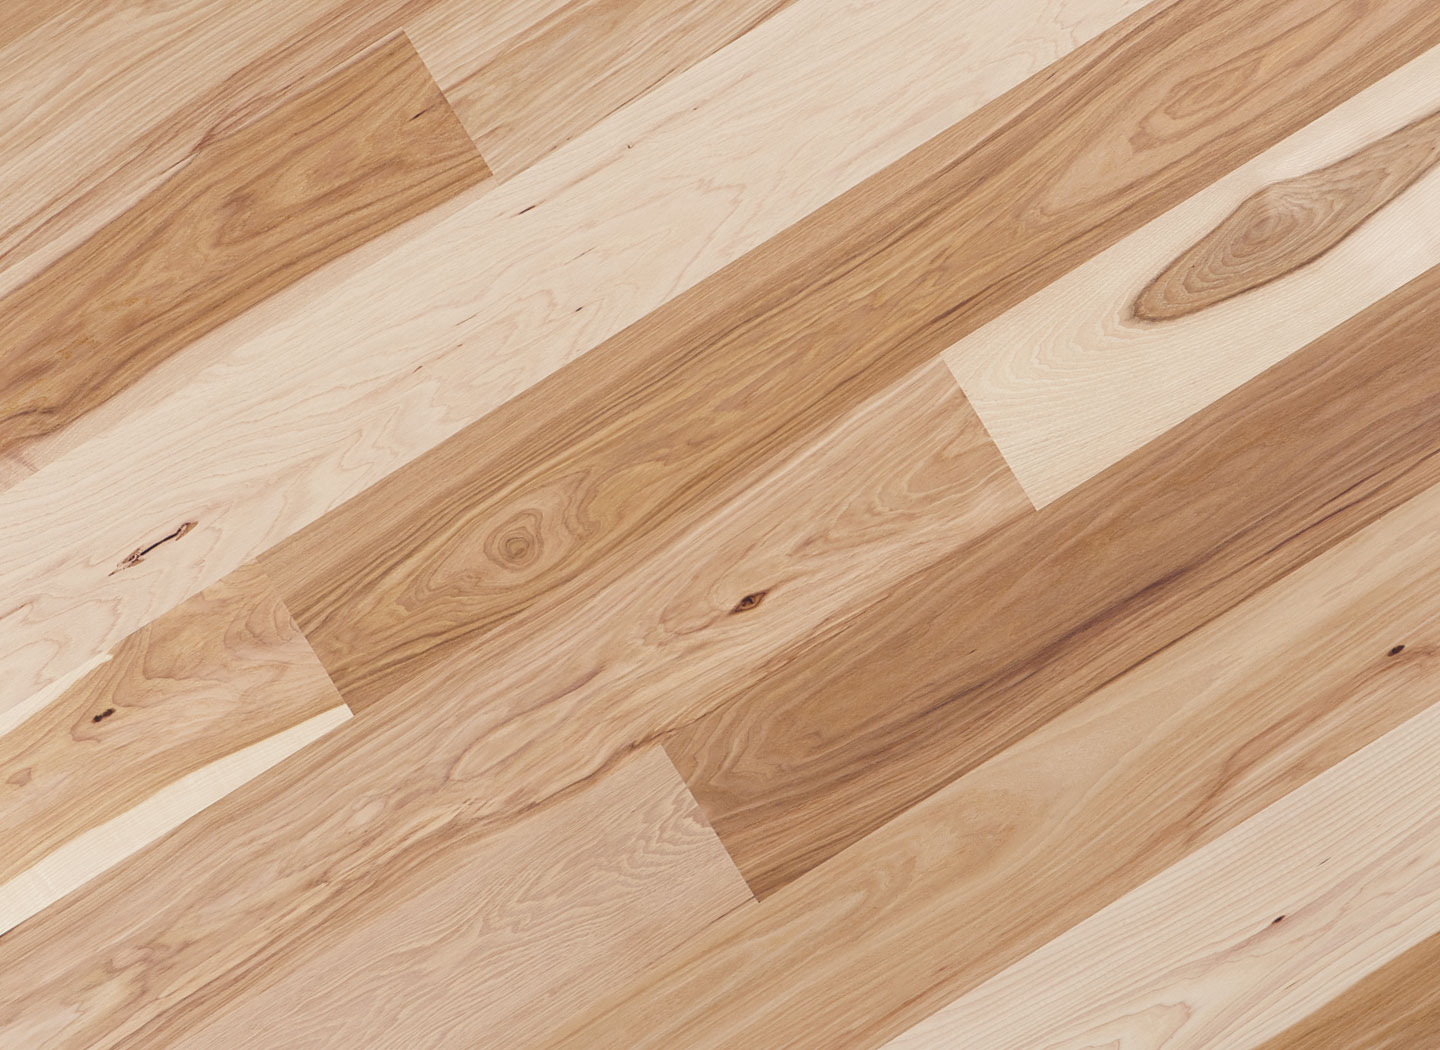 Hickory Pecan Flooring Saroyan Hardwoods, Pecan Engineered Hardwood Flooring